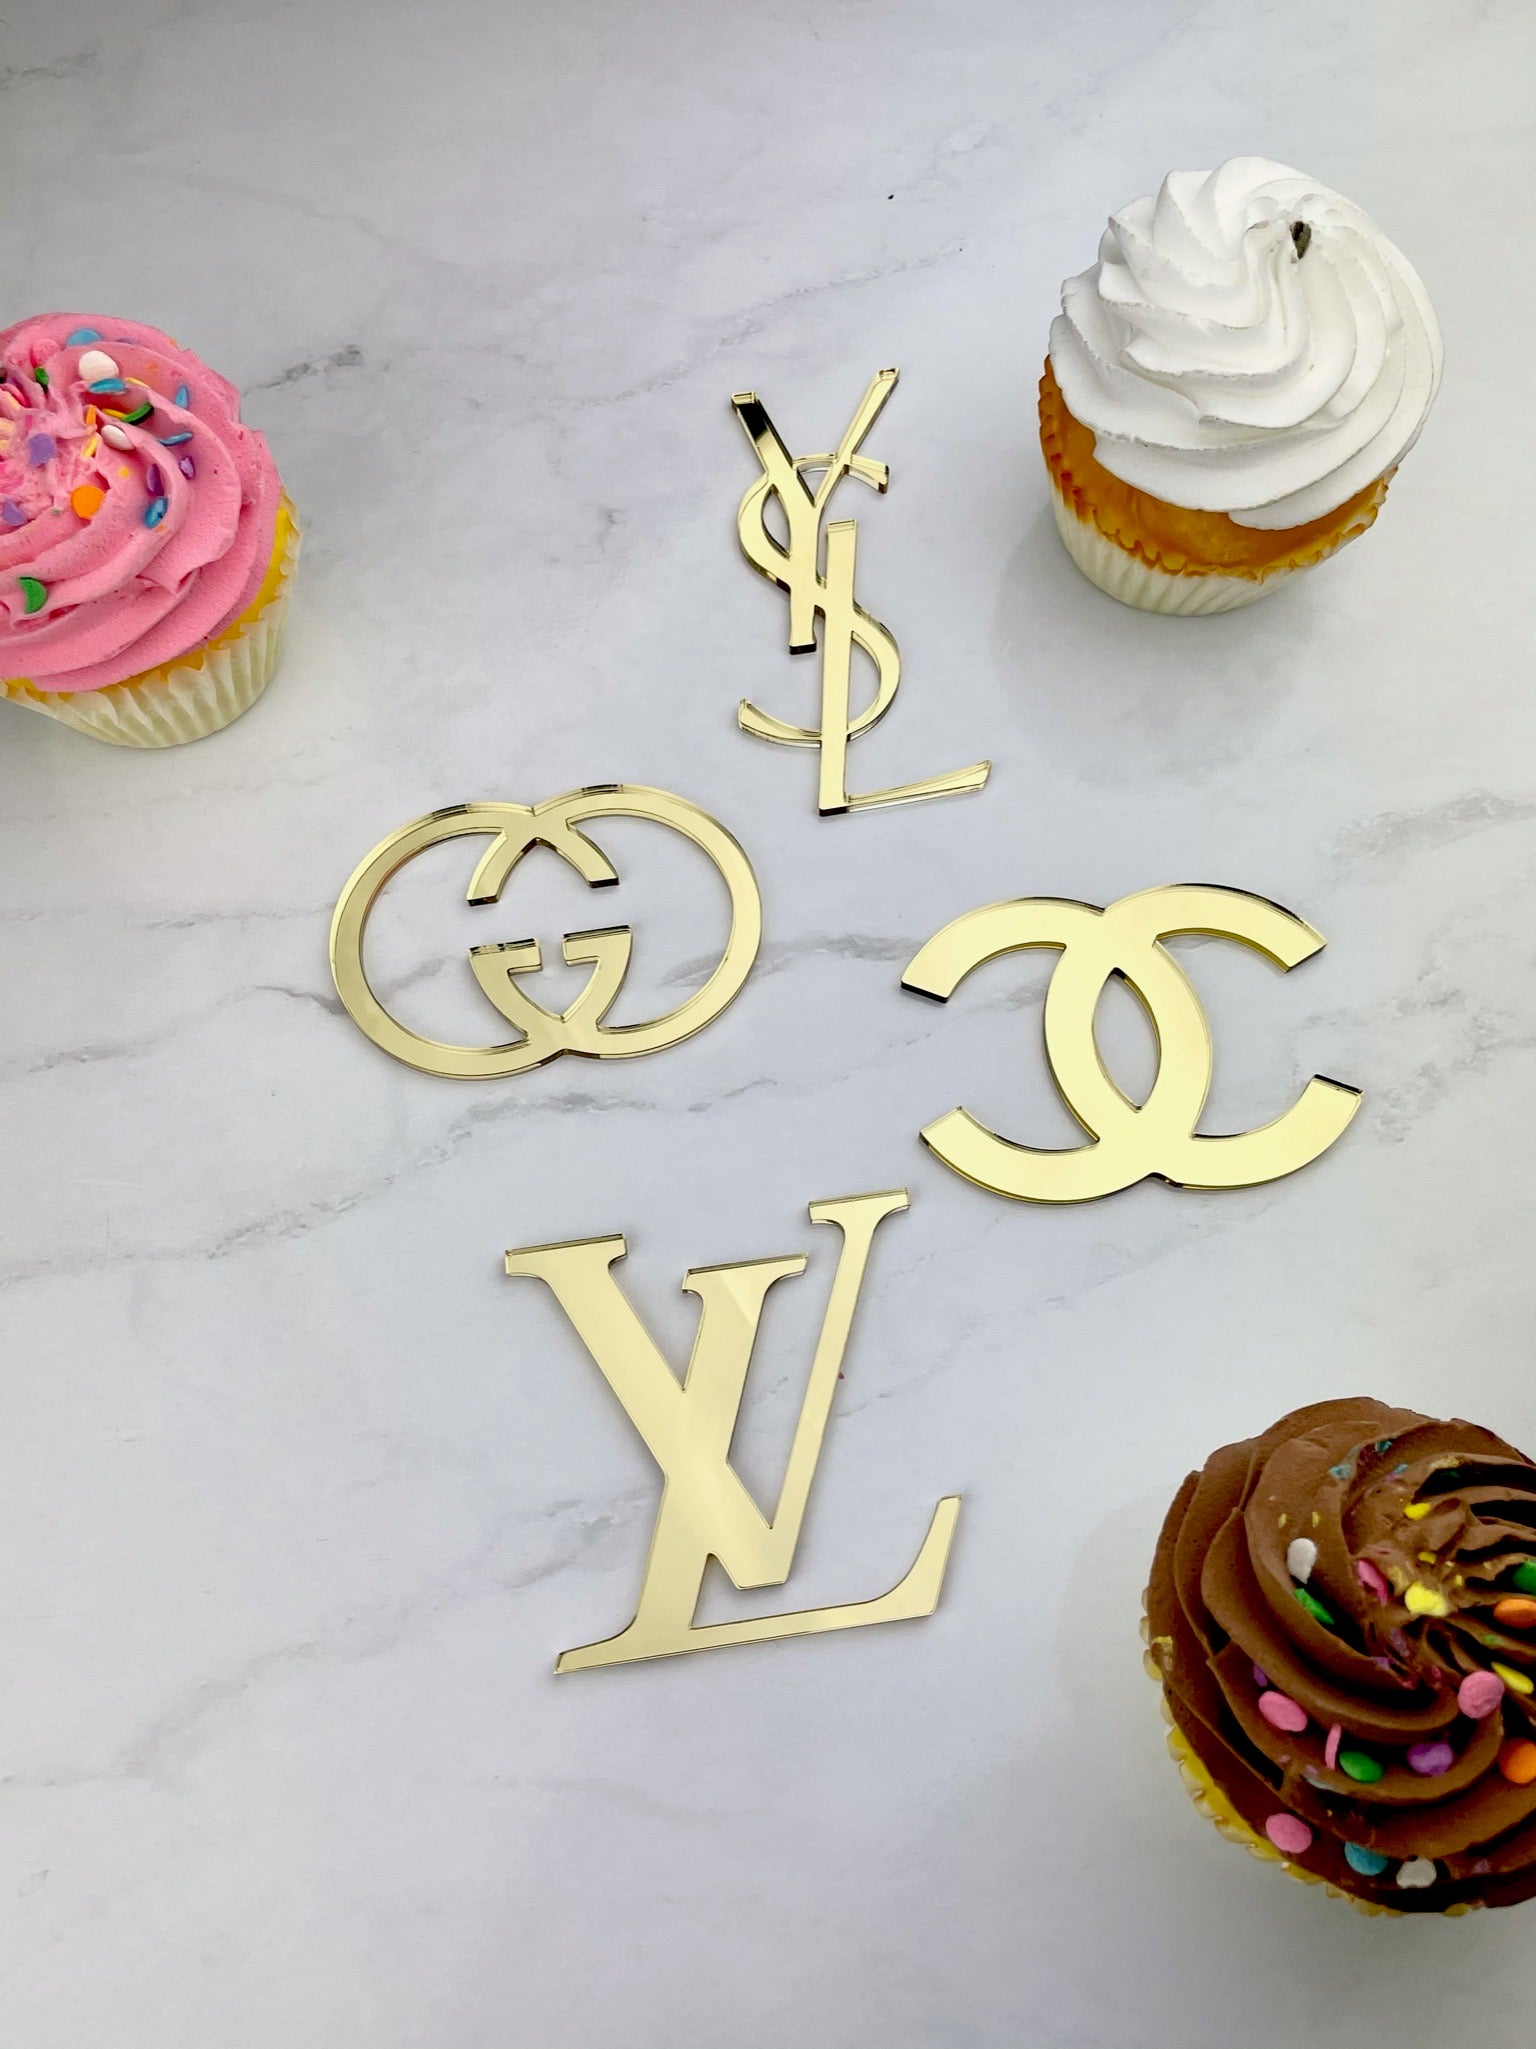 Louis Vuitton Cupcake Toppers 